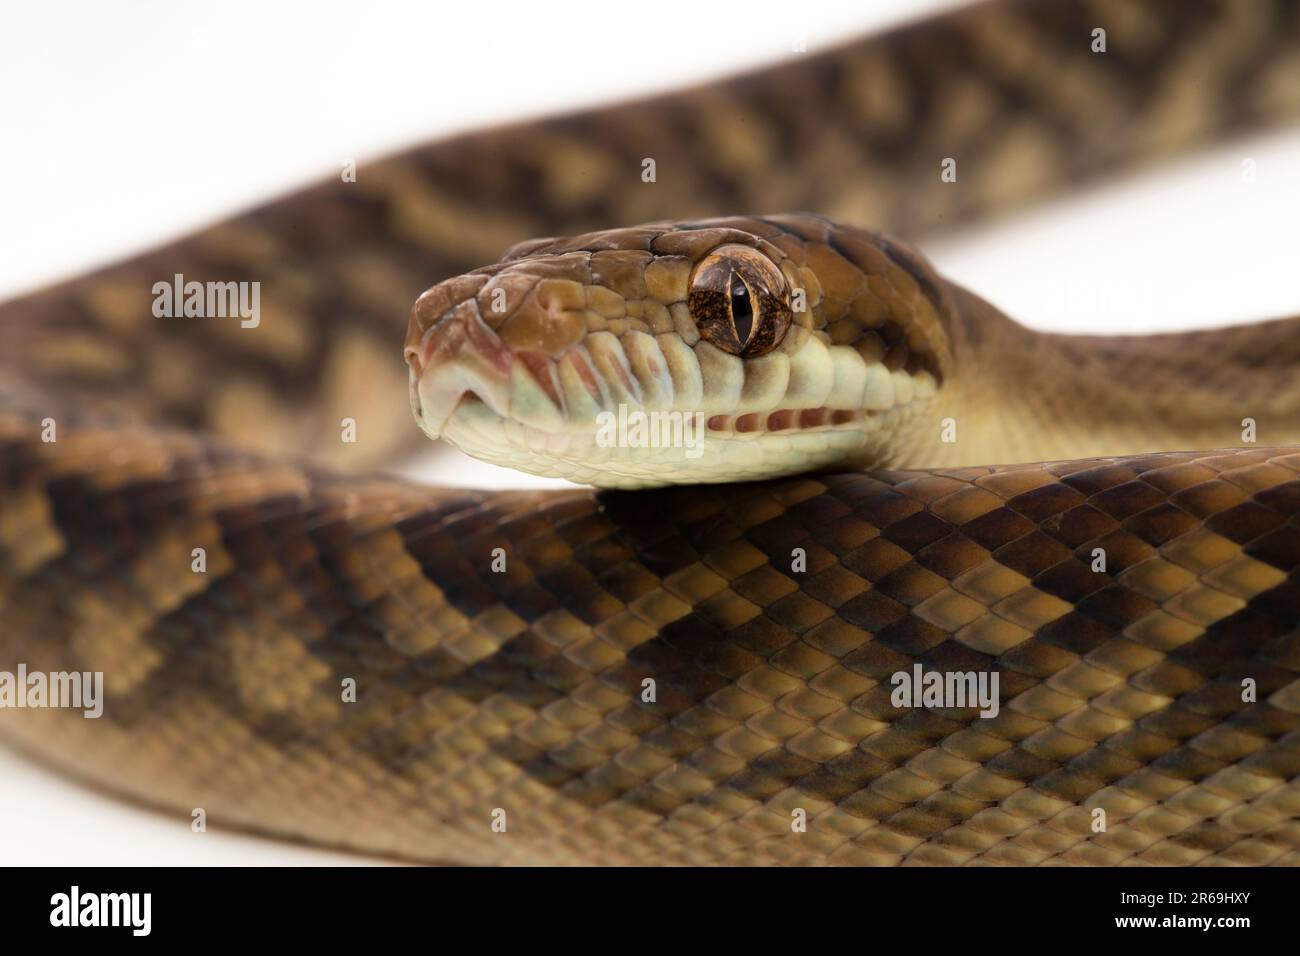 The Scrub python (Morelia amethistina) Amethystine python snake isolated on white background Stock Photo